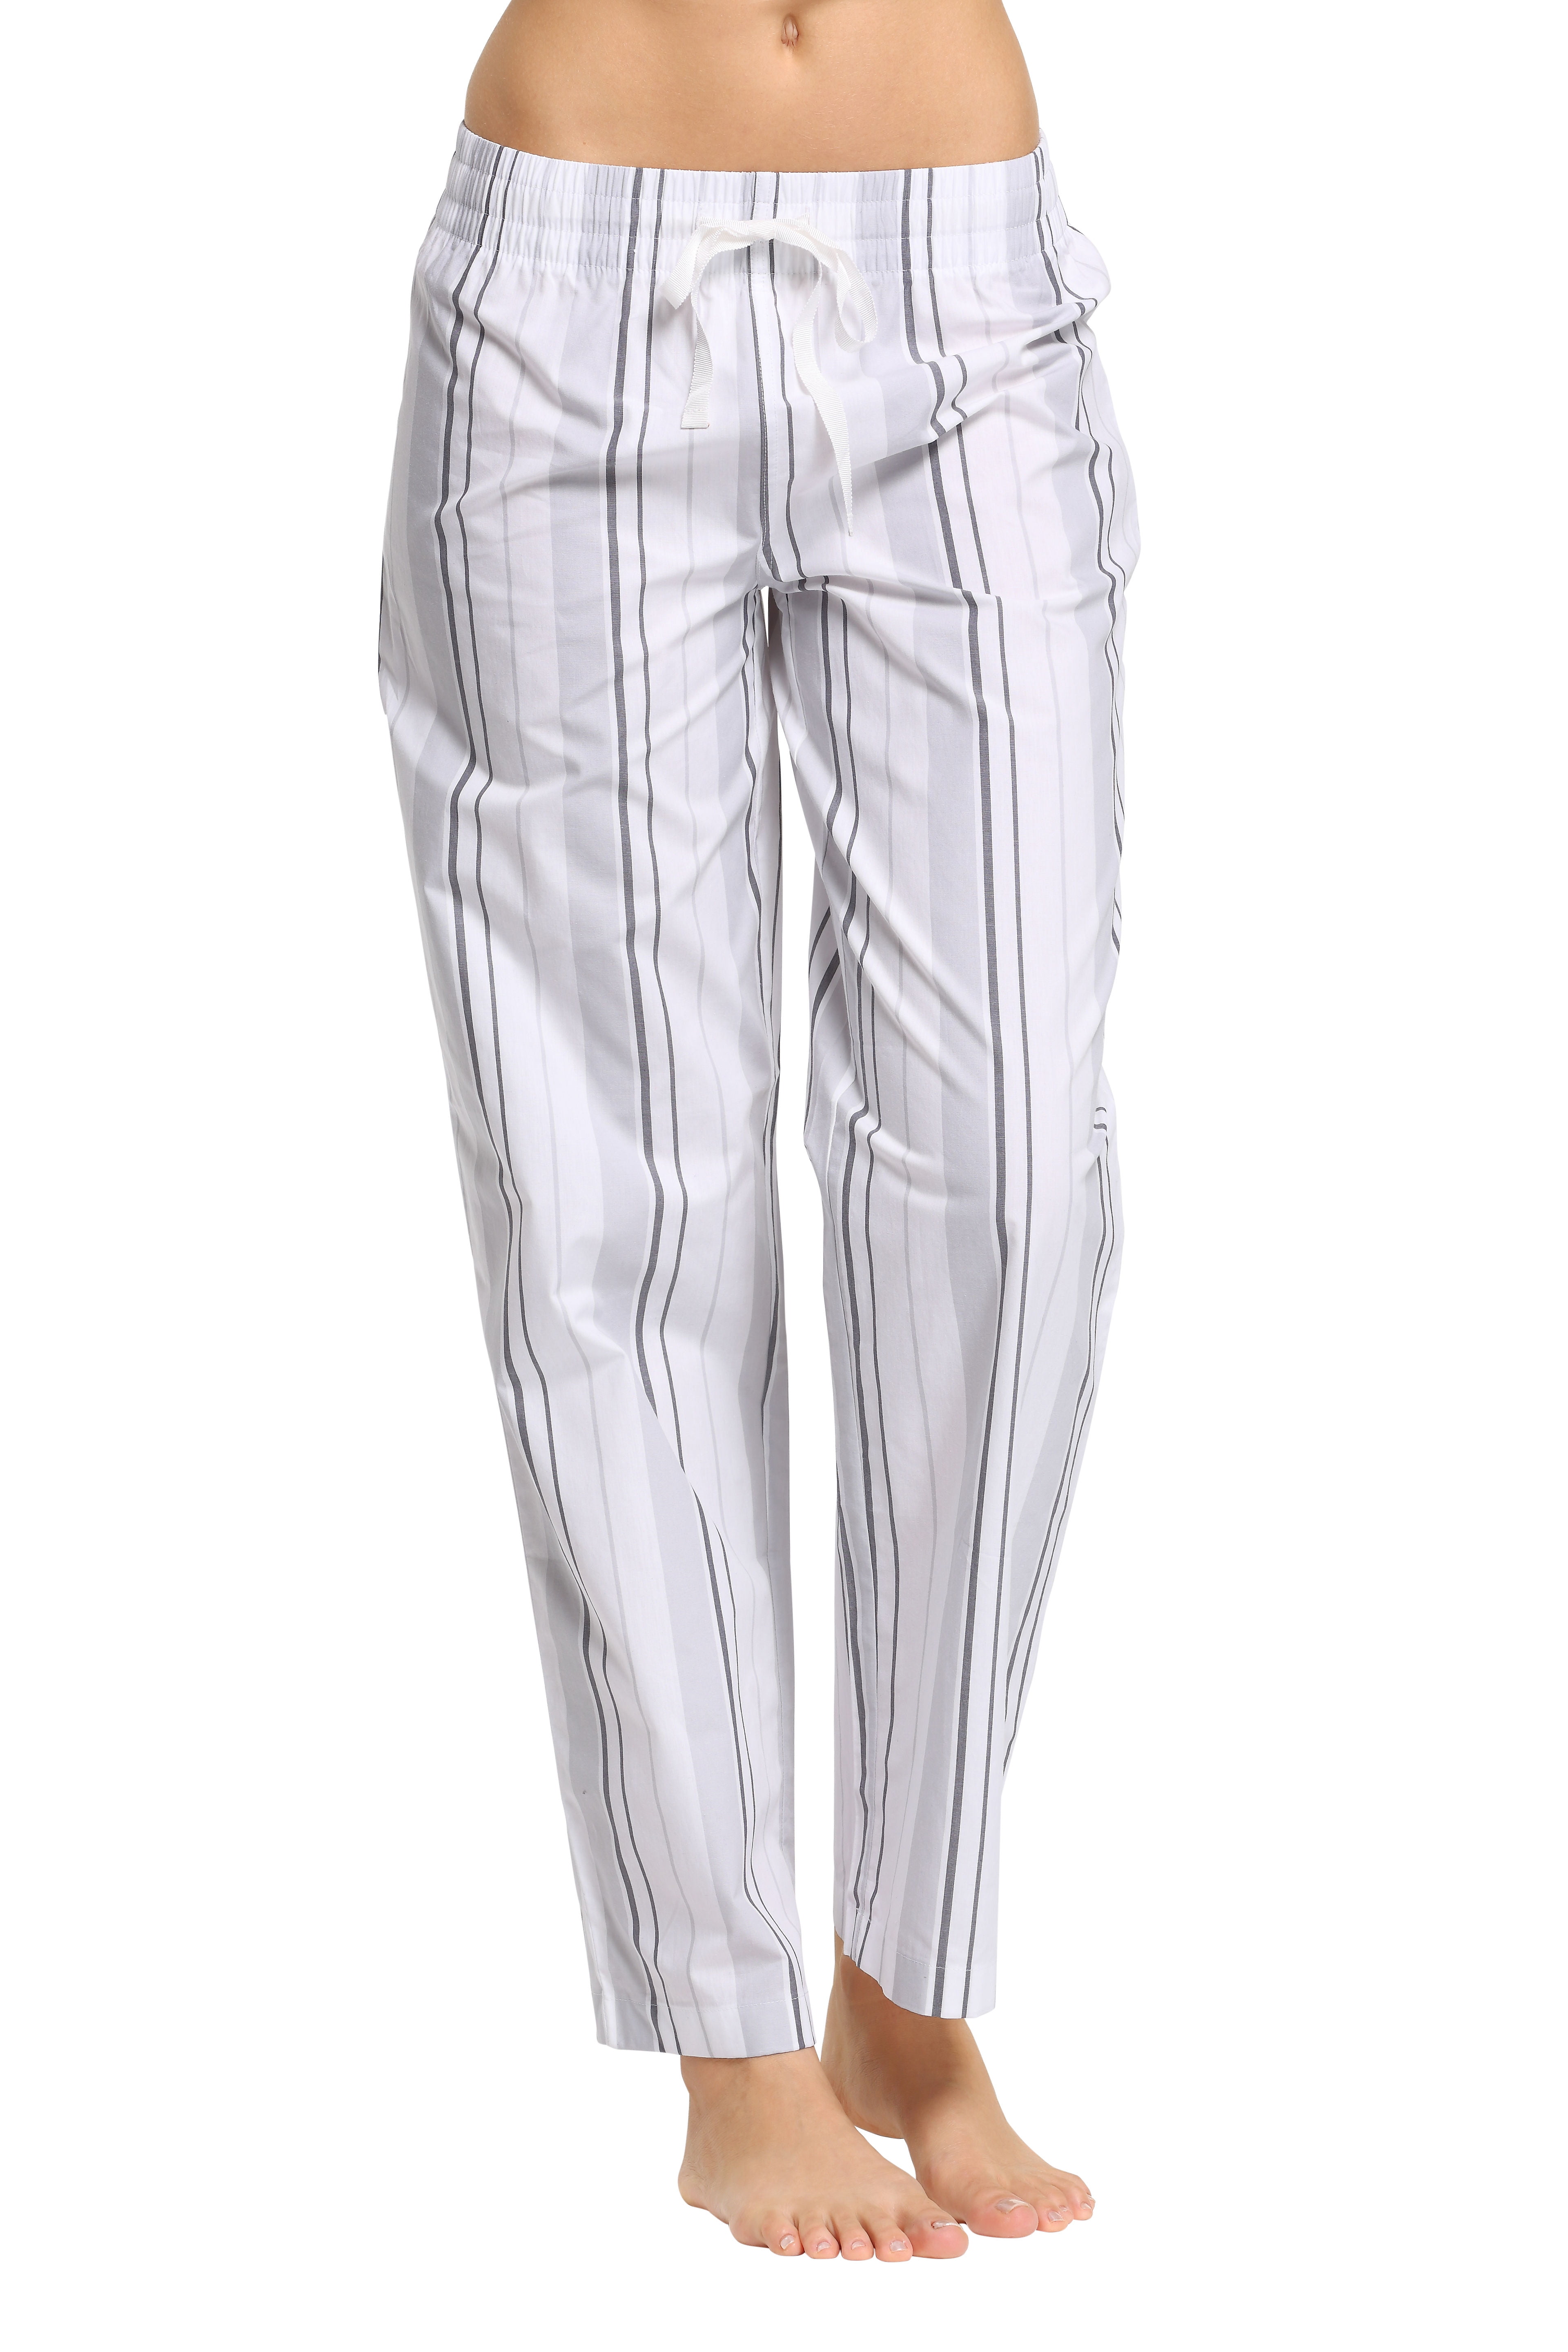 CYZ Women's 100% Cotton Woven Sleep Pajama Pants - Walmart.com